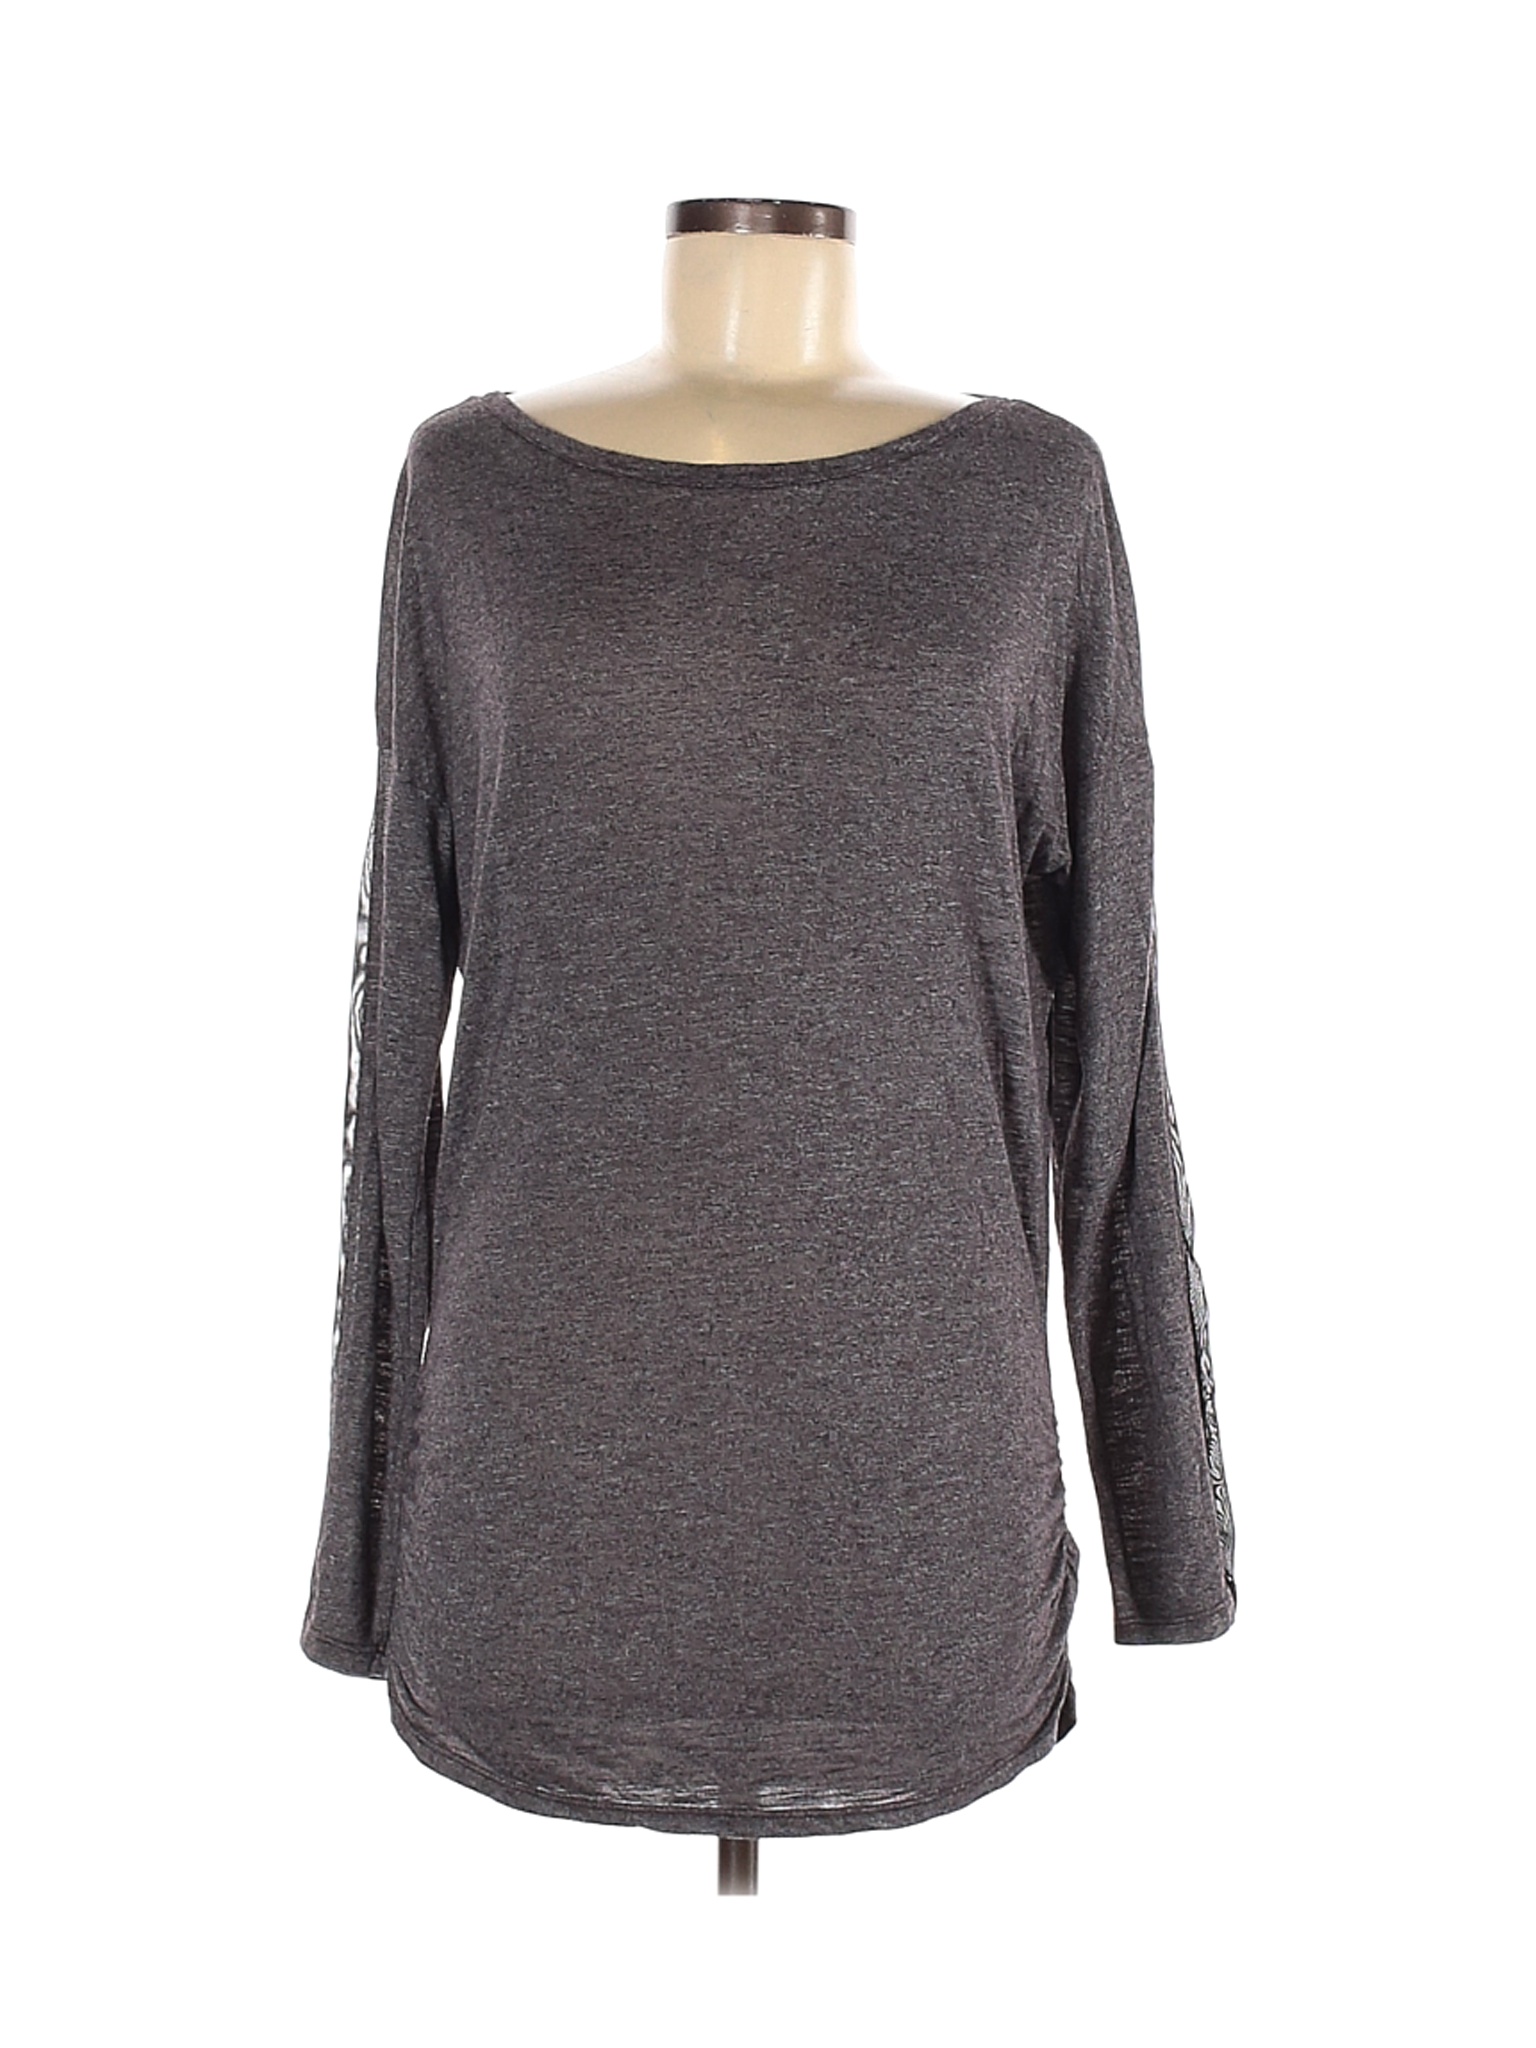 Michael Stars Women Gray Long Sleeve T-Shirt S | eBay